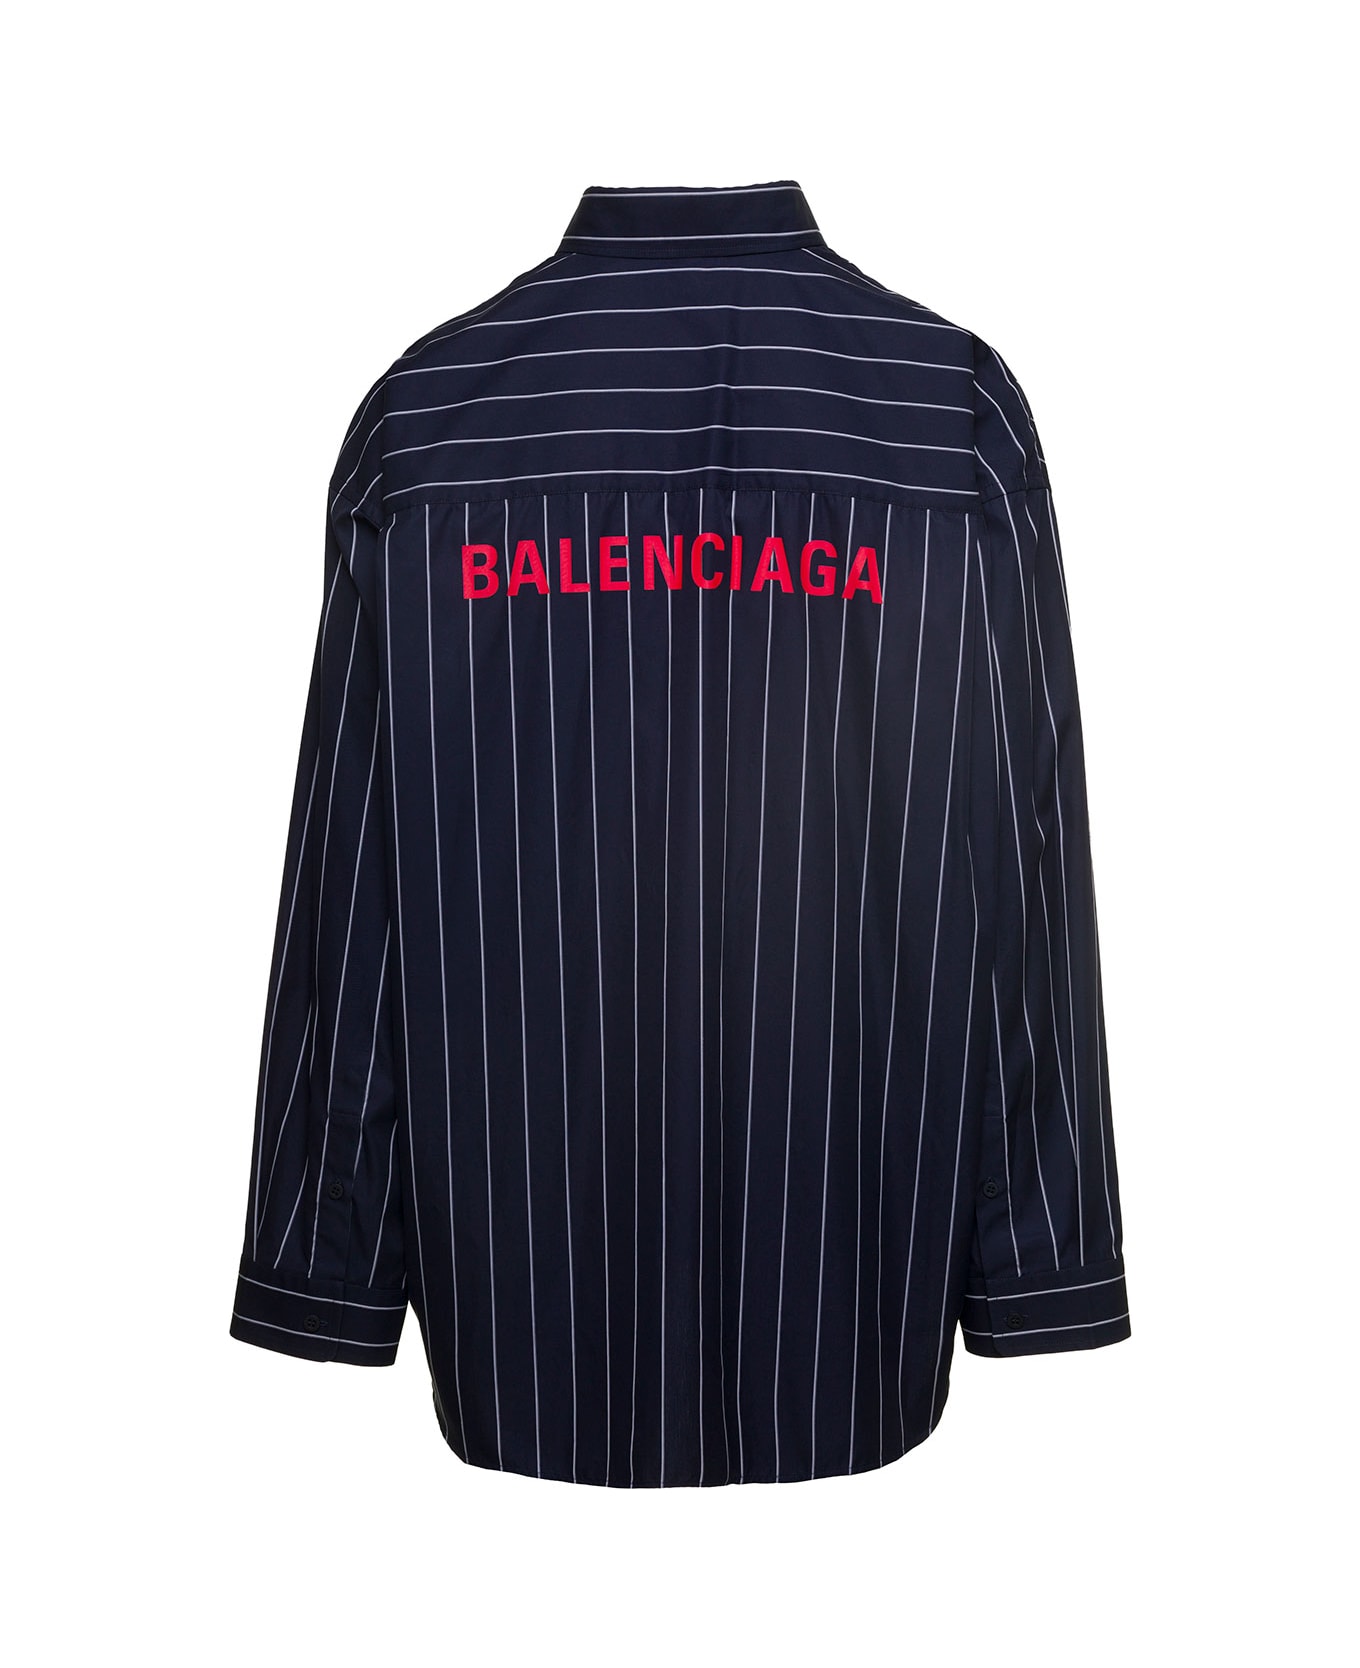 Balenciaga Striped Blouse With Contrasting Logo - Navy White